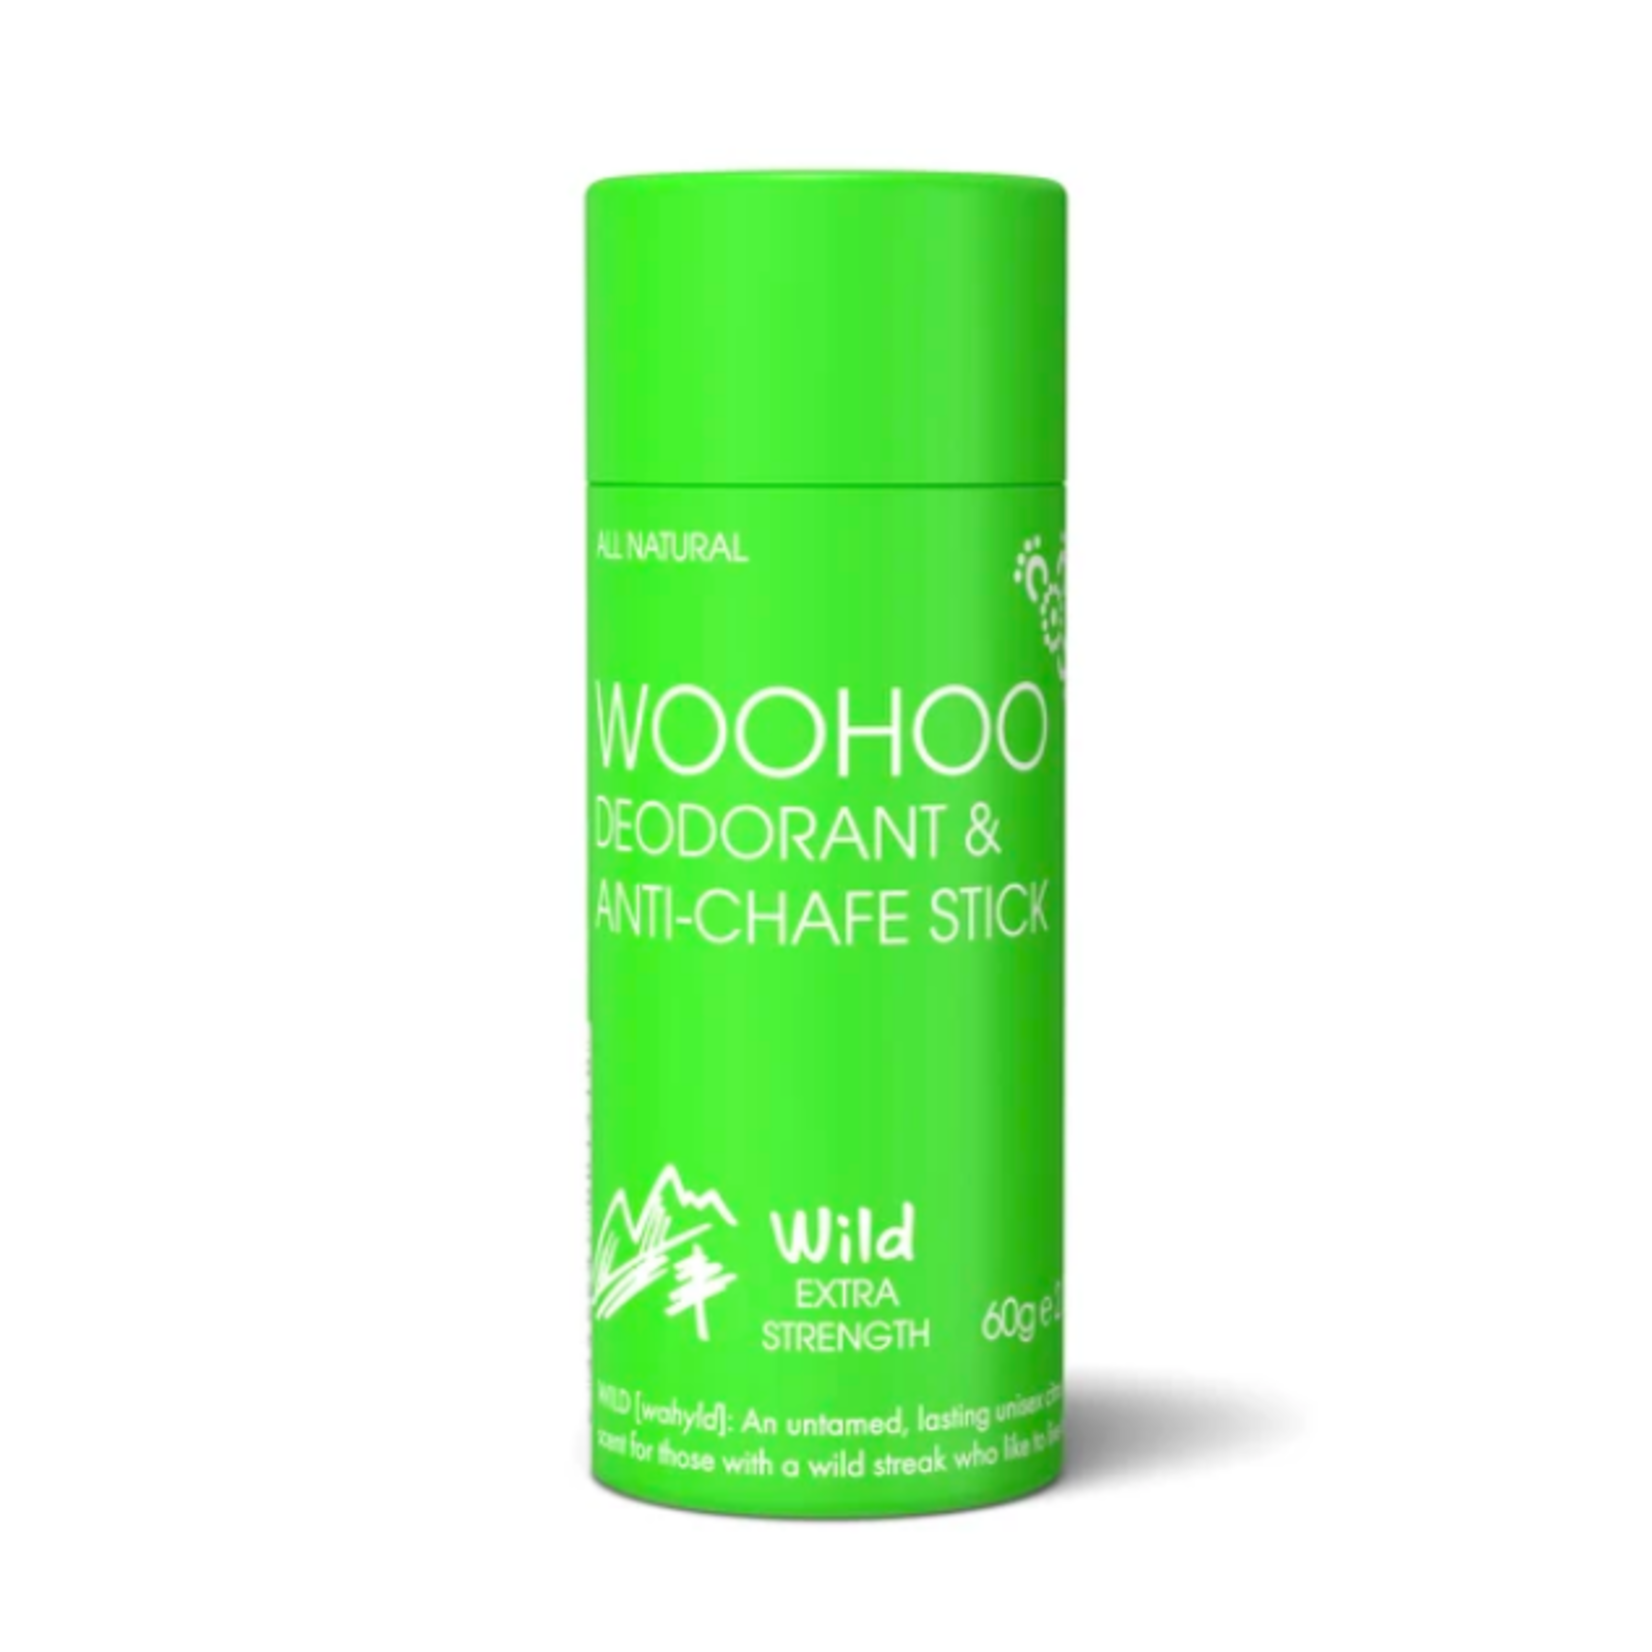 Woohoo Body Woohoo deodorant & anti-chafe stick Wild